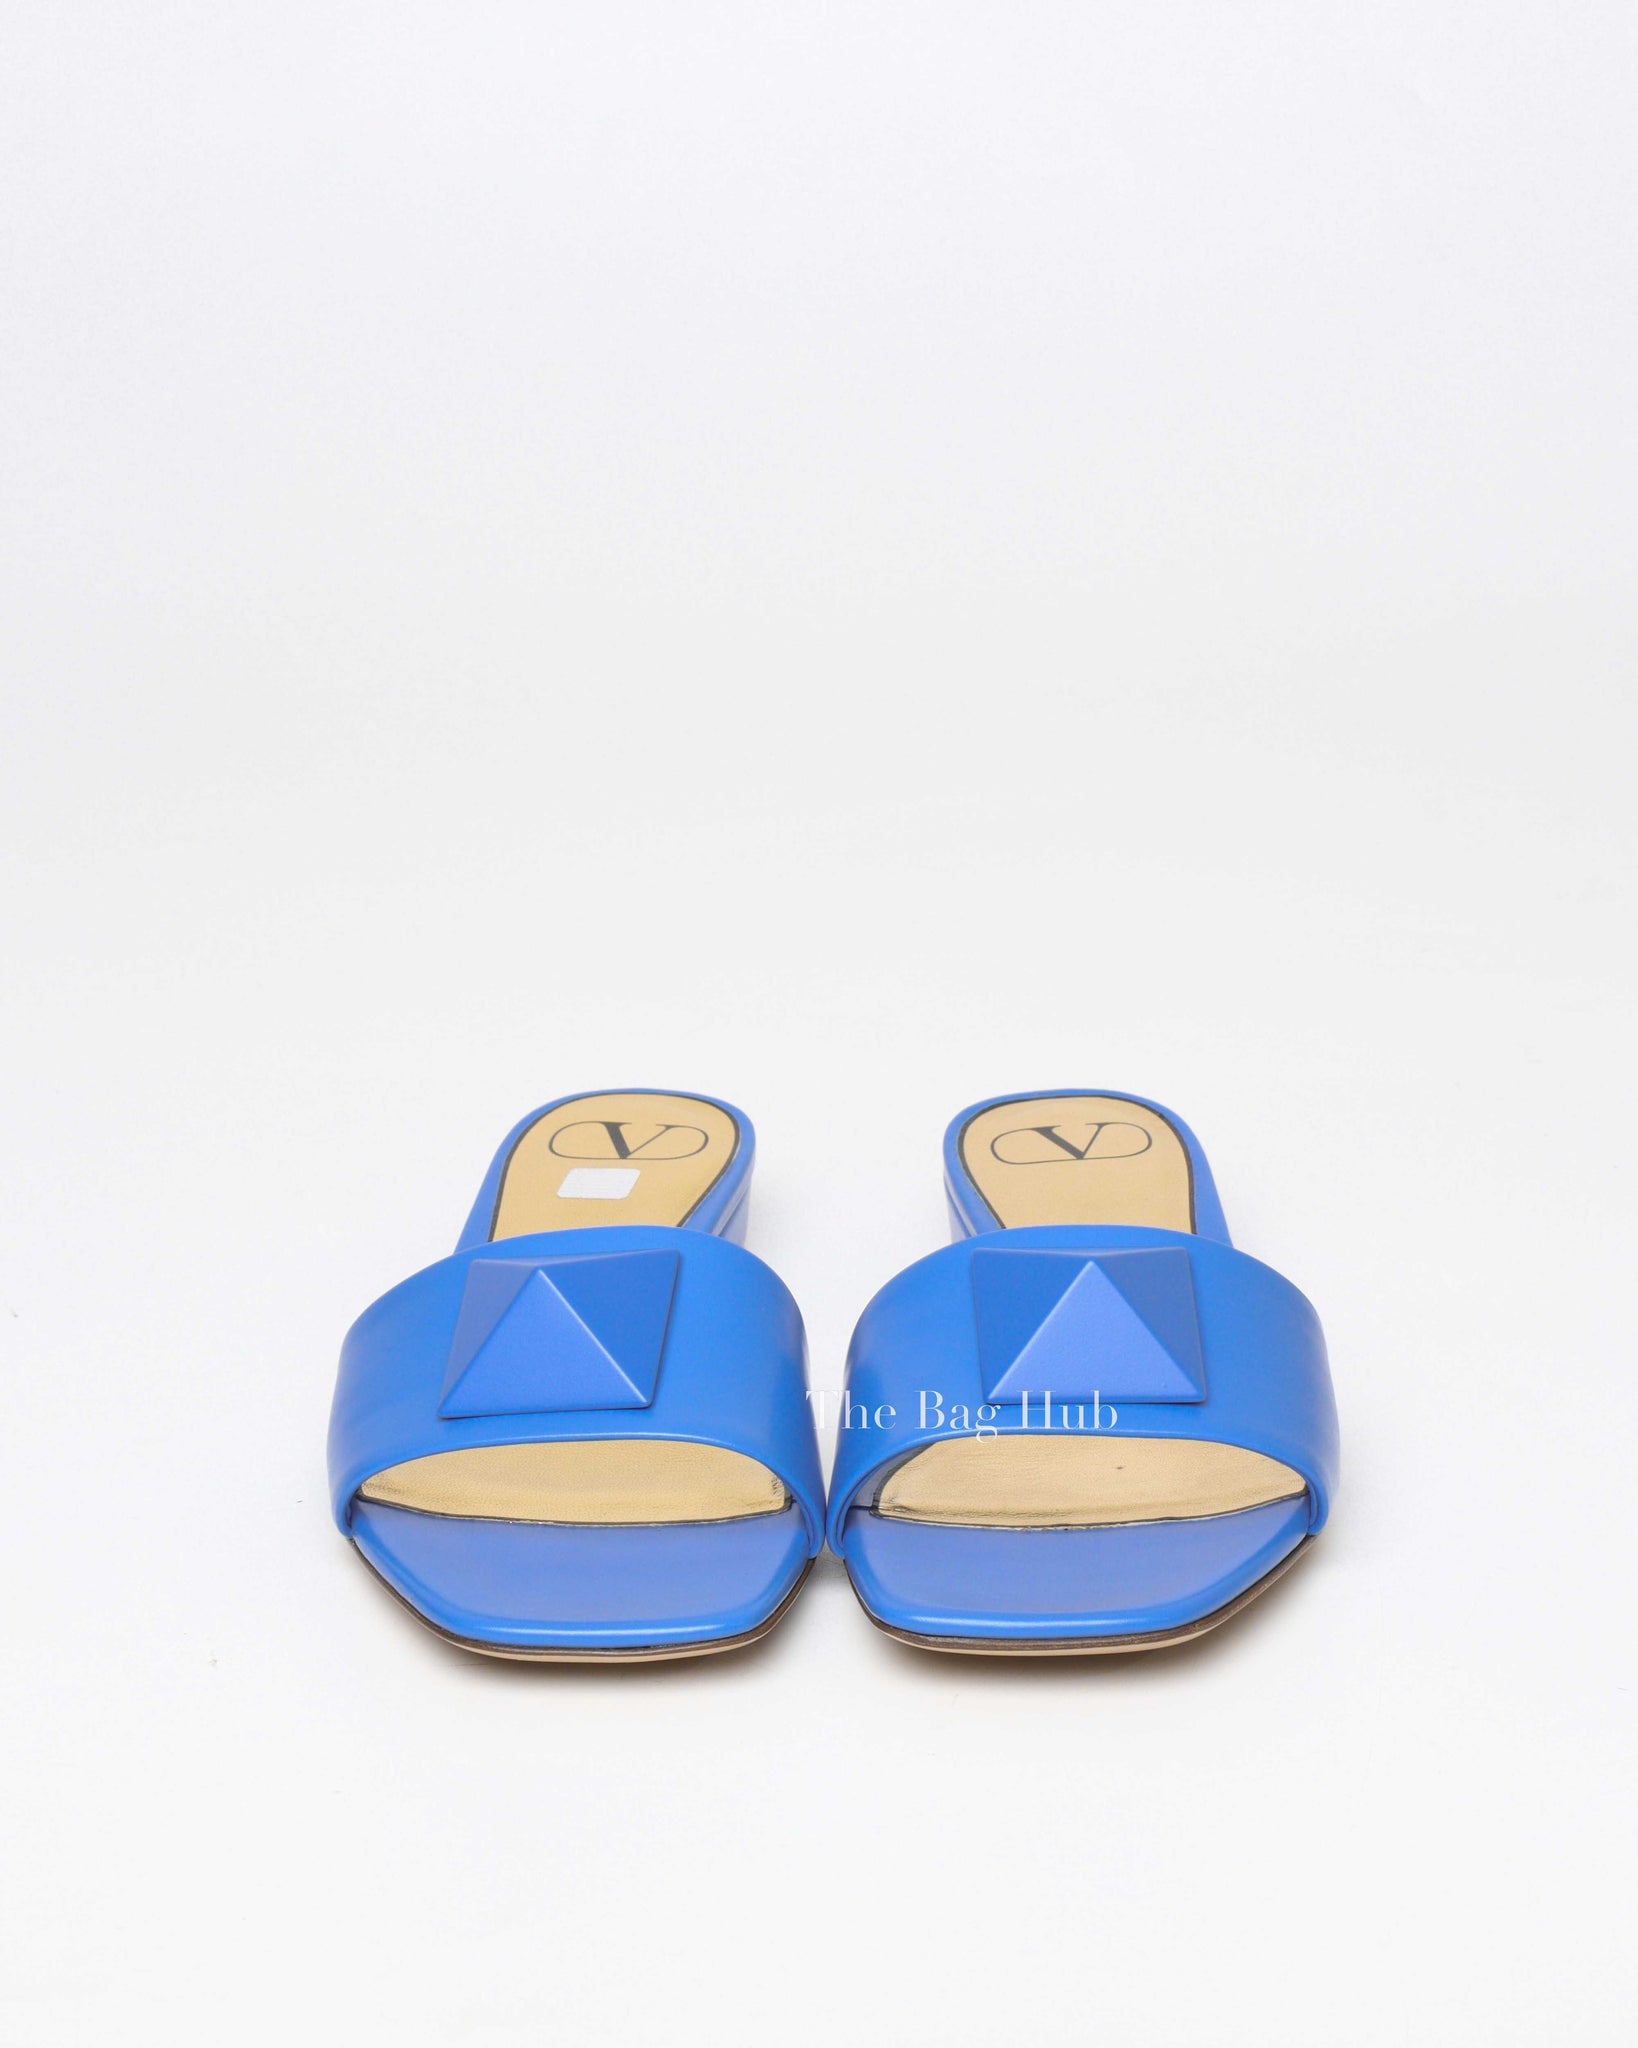 Valentino Garavani Blue One Stud Sandals Size 38